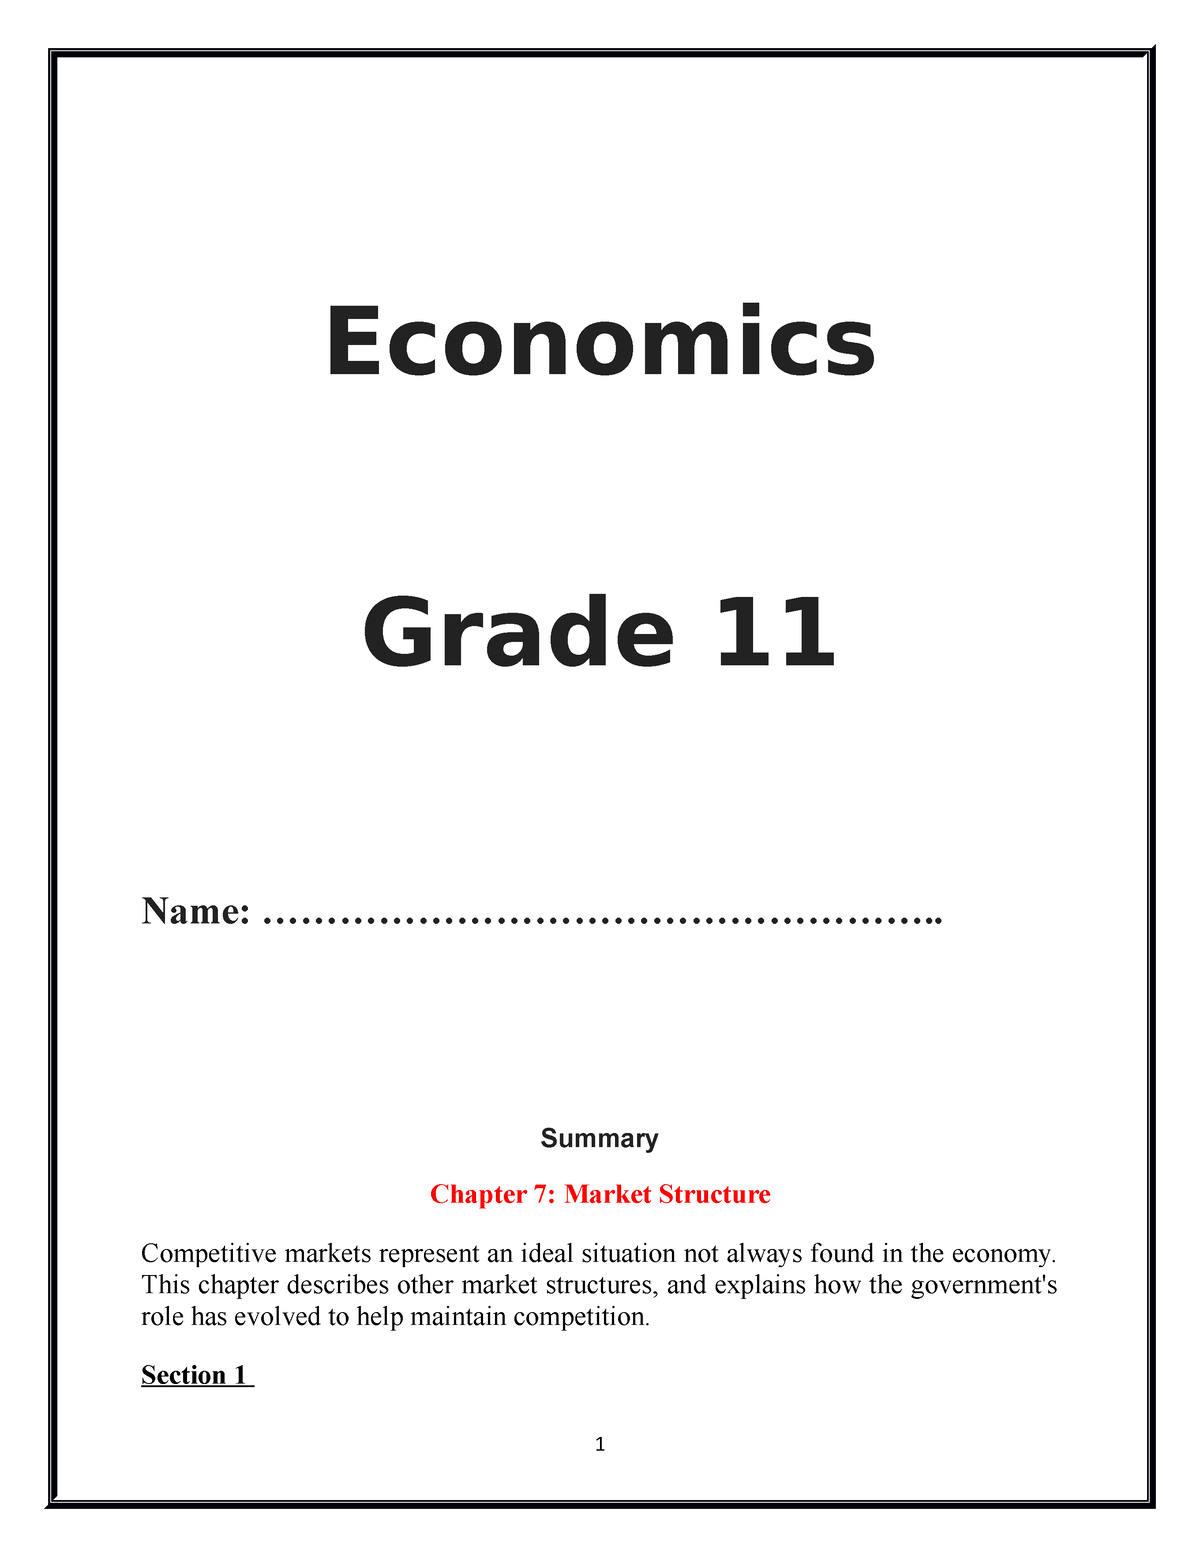 economics grade 11 case study term 3 pdf download